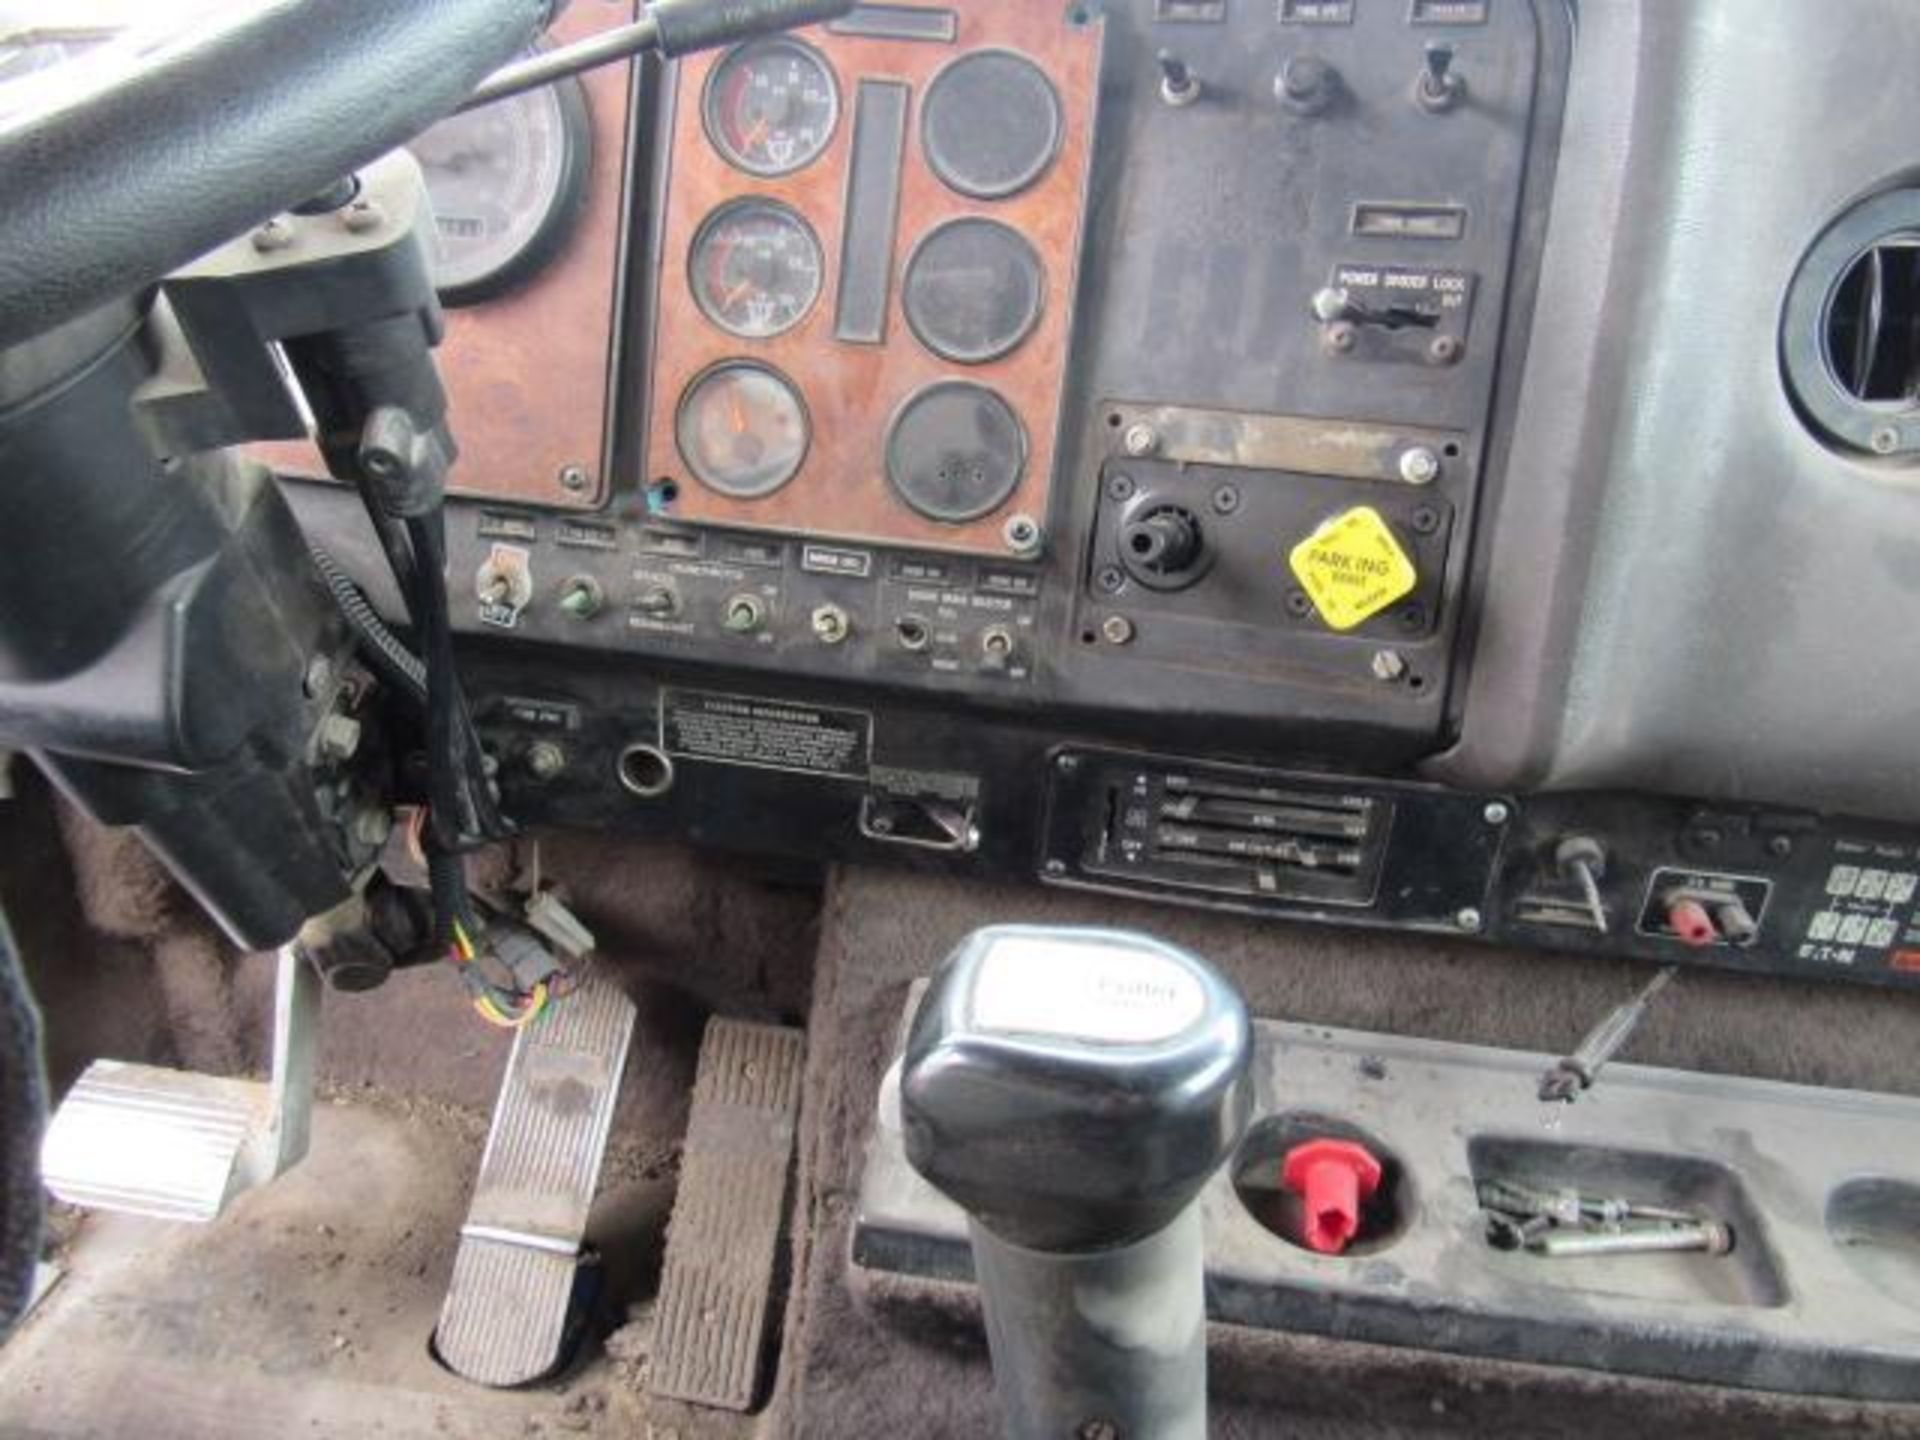 1993 International 9200 Tractor, VIN # 2HSFMA7RXPCO76568, Eaton Fuller Manual Transmission, - Image 11 of 12